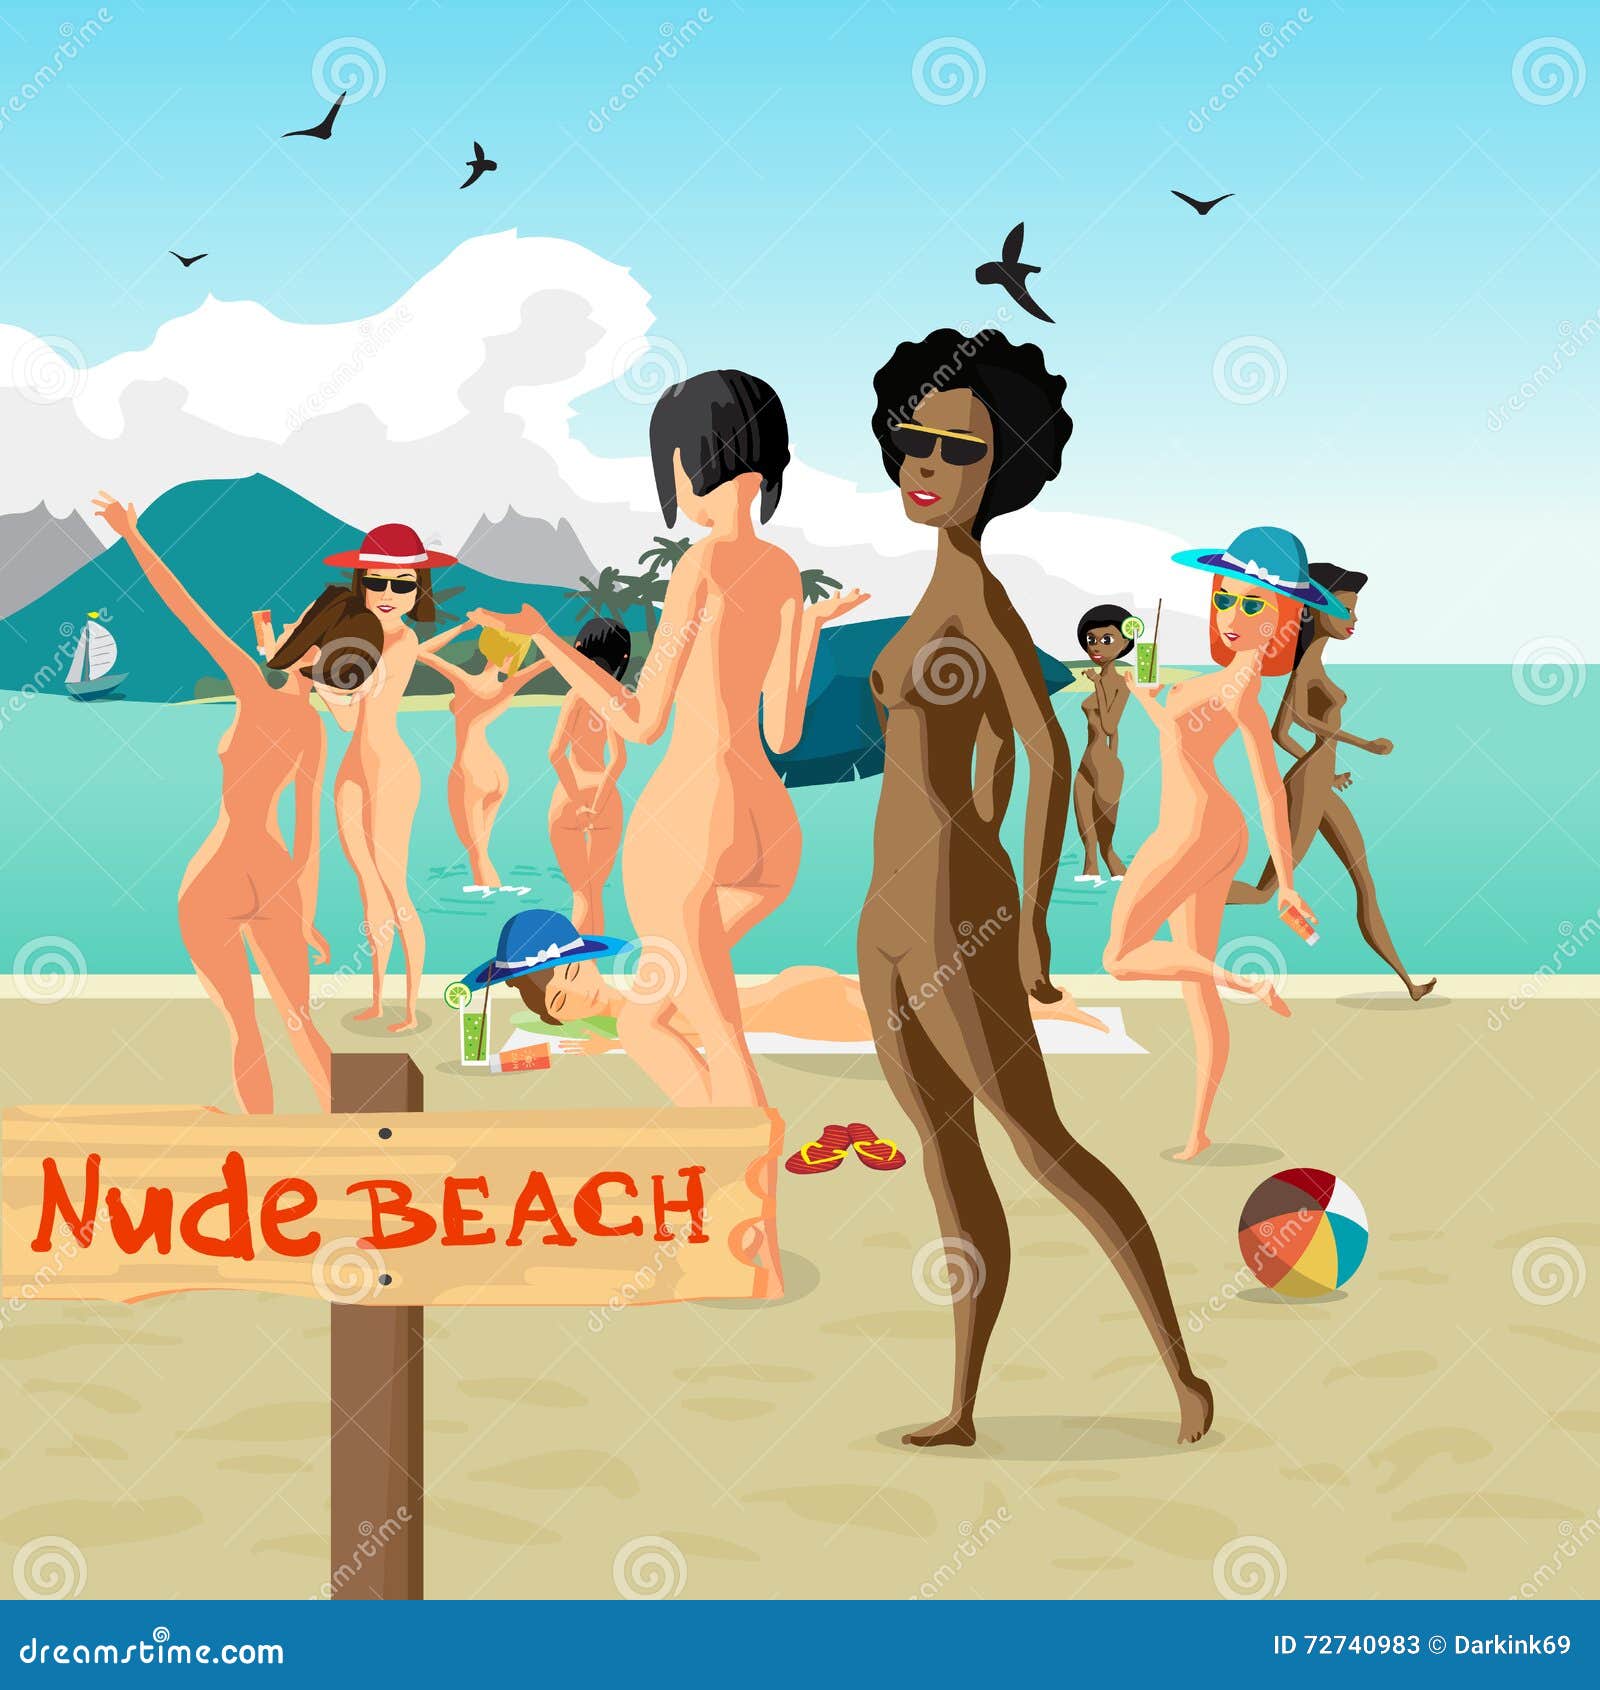 Nude Women Beach